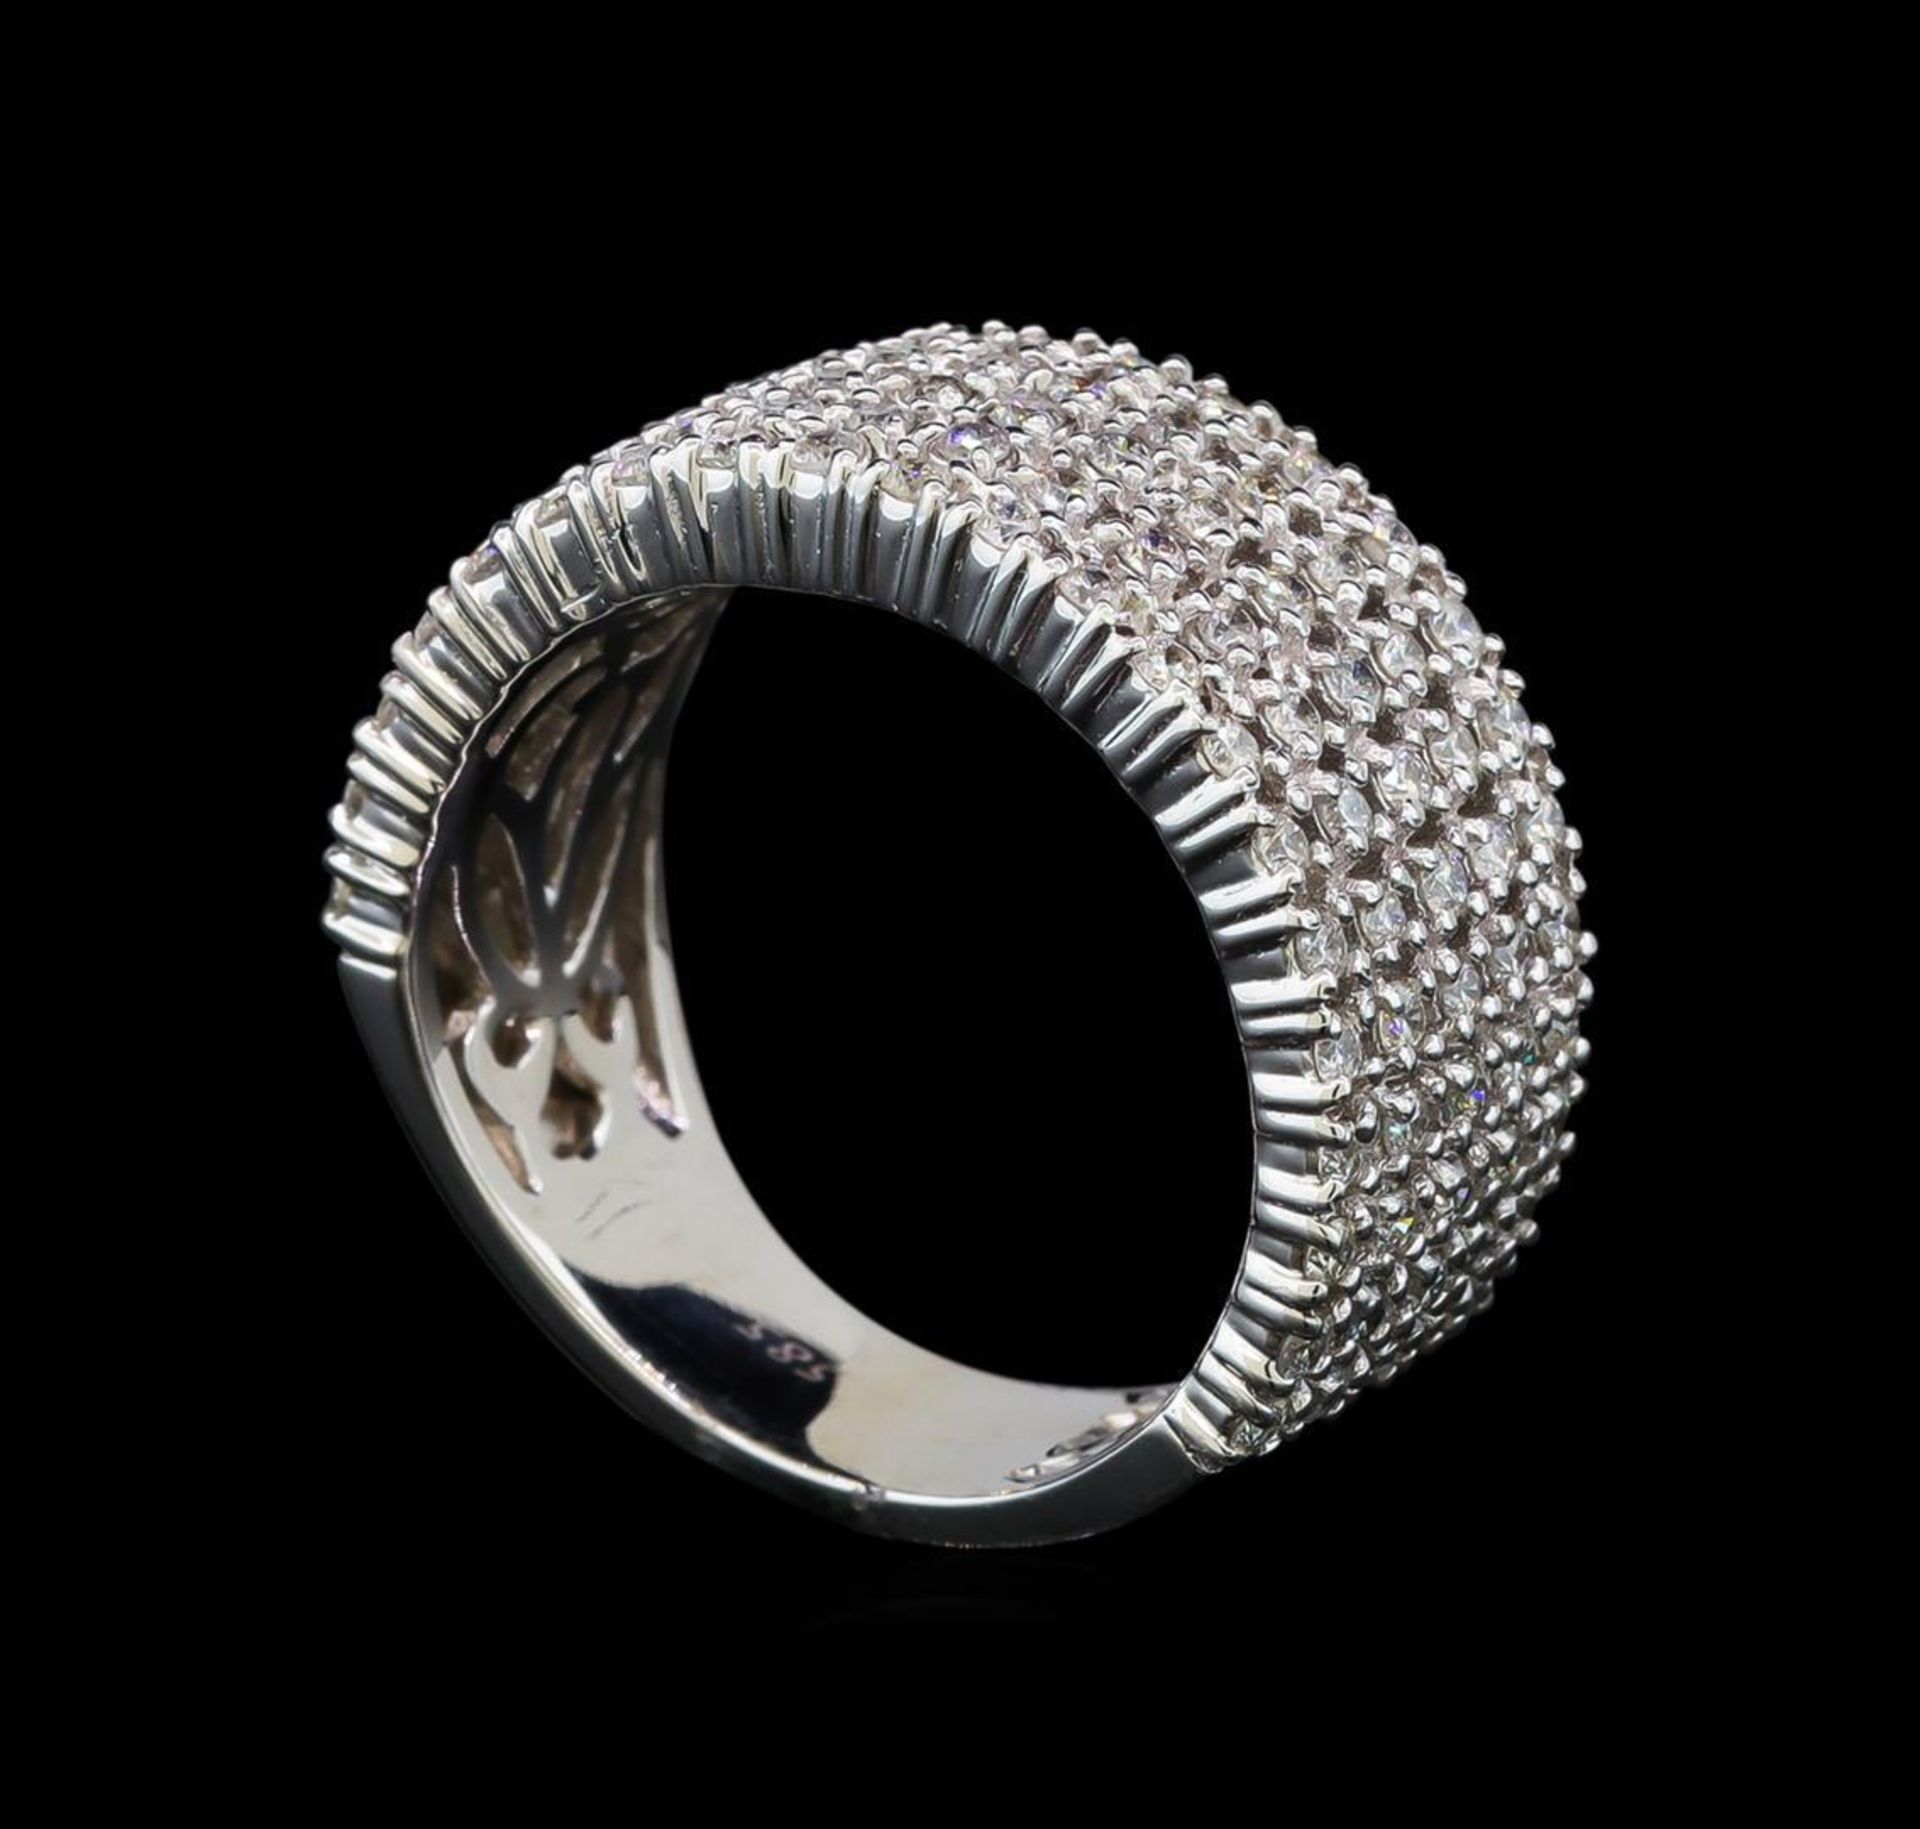 1.07 ctw Diamond Ring - 14KT White Gold - Image 4 of 5